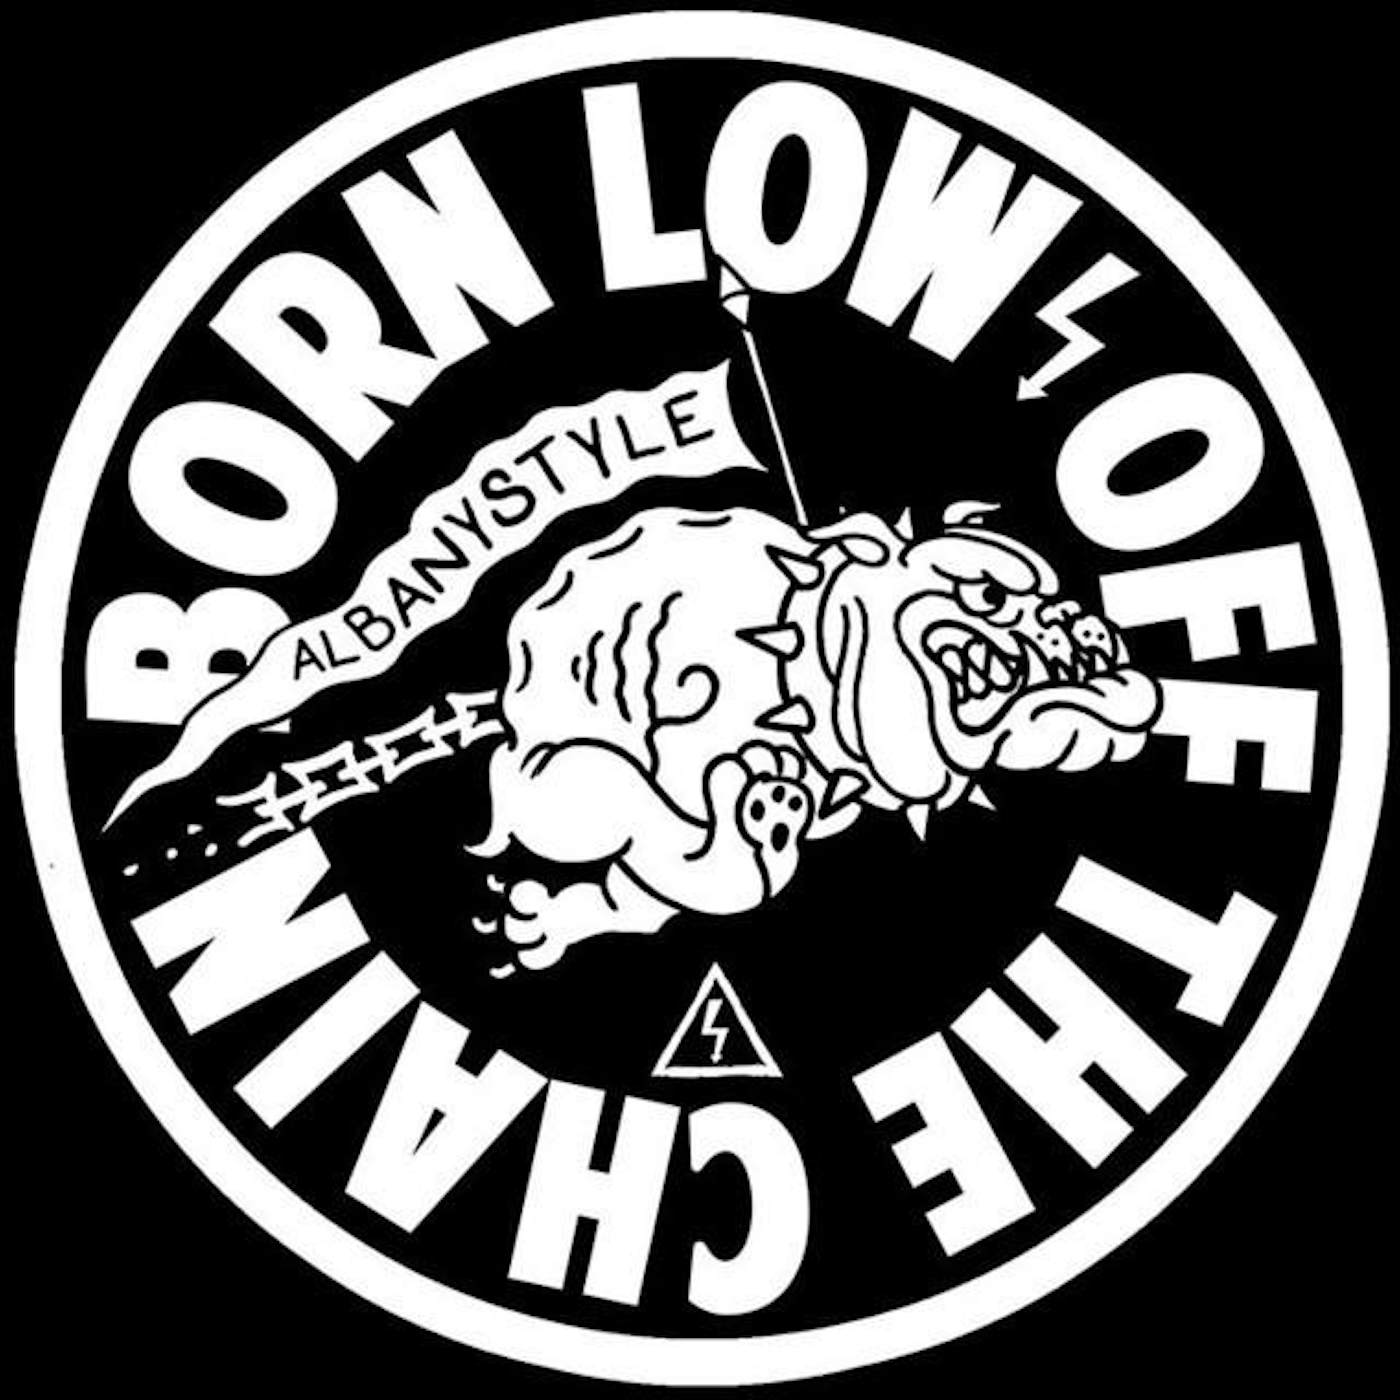 Born Low